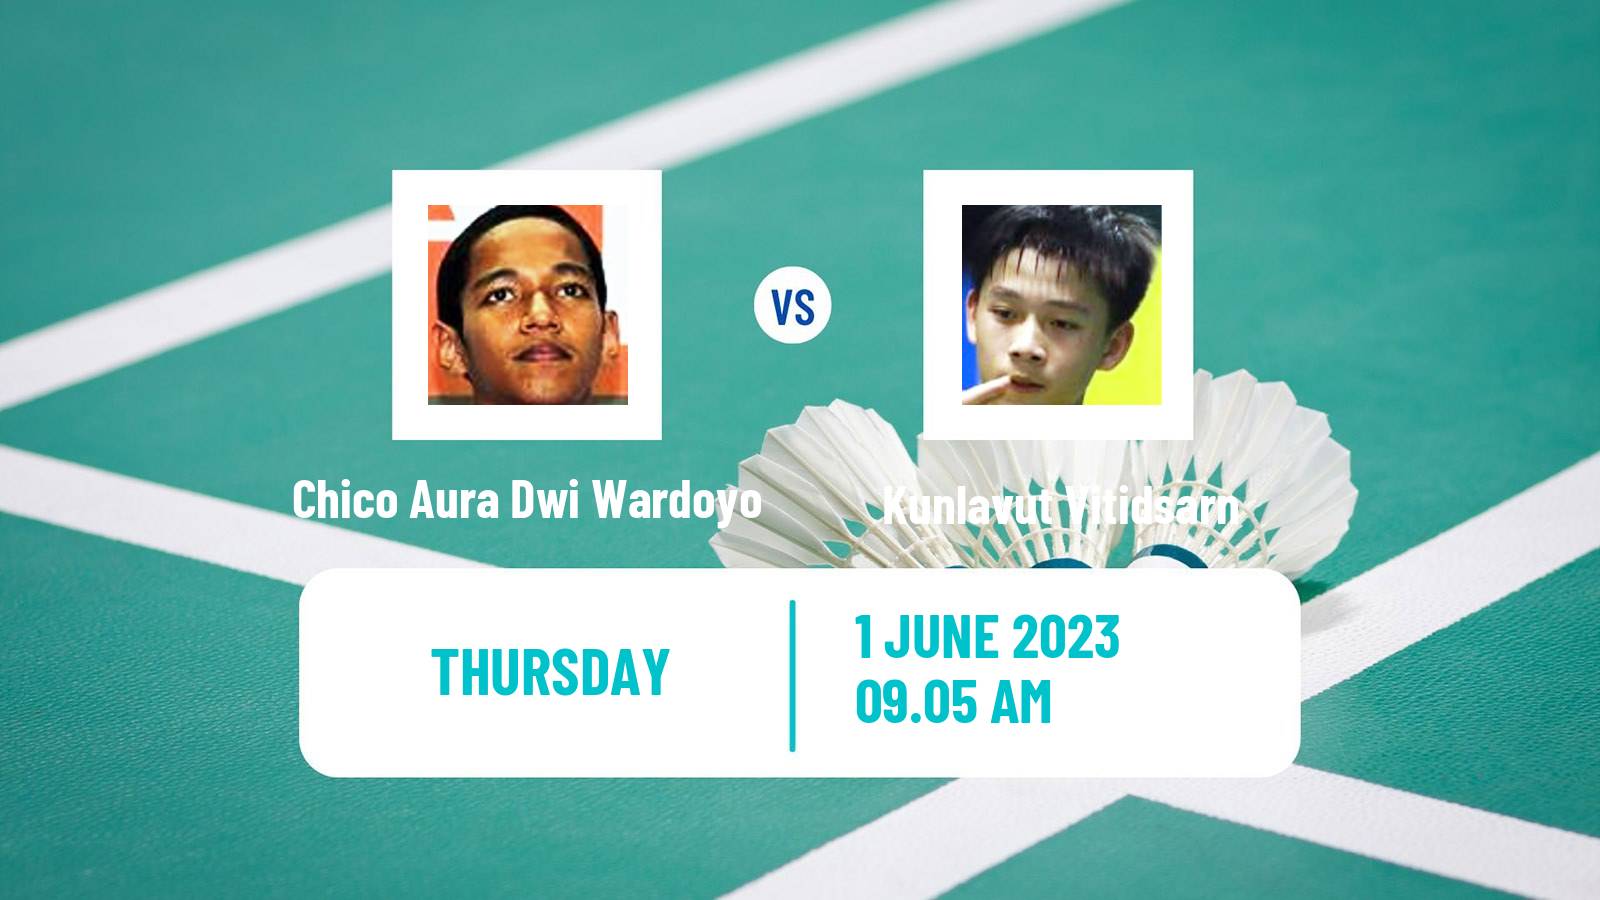 Badminton BWF World Tour Thailand Open Men Chico Aura Dwi Wardoyo - Kunlavut Vitidsarn